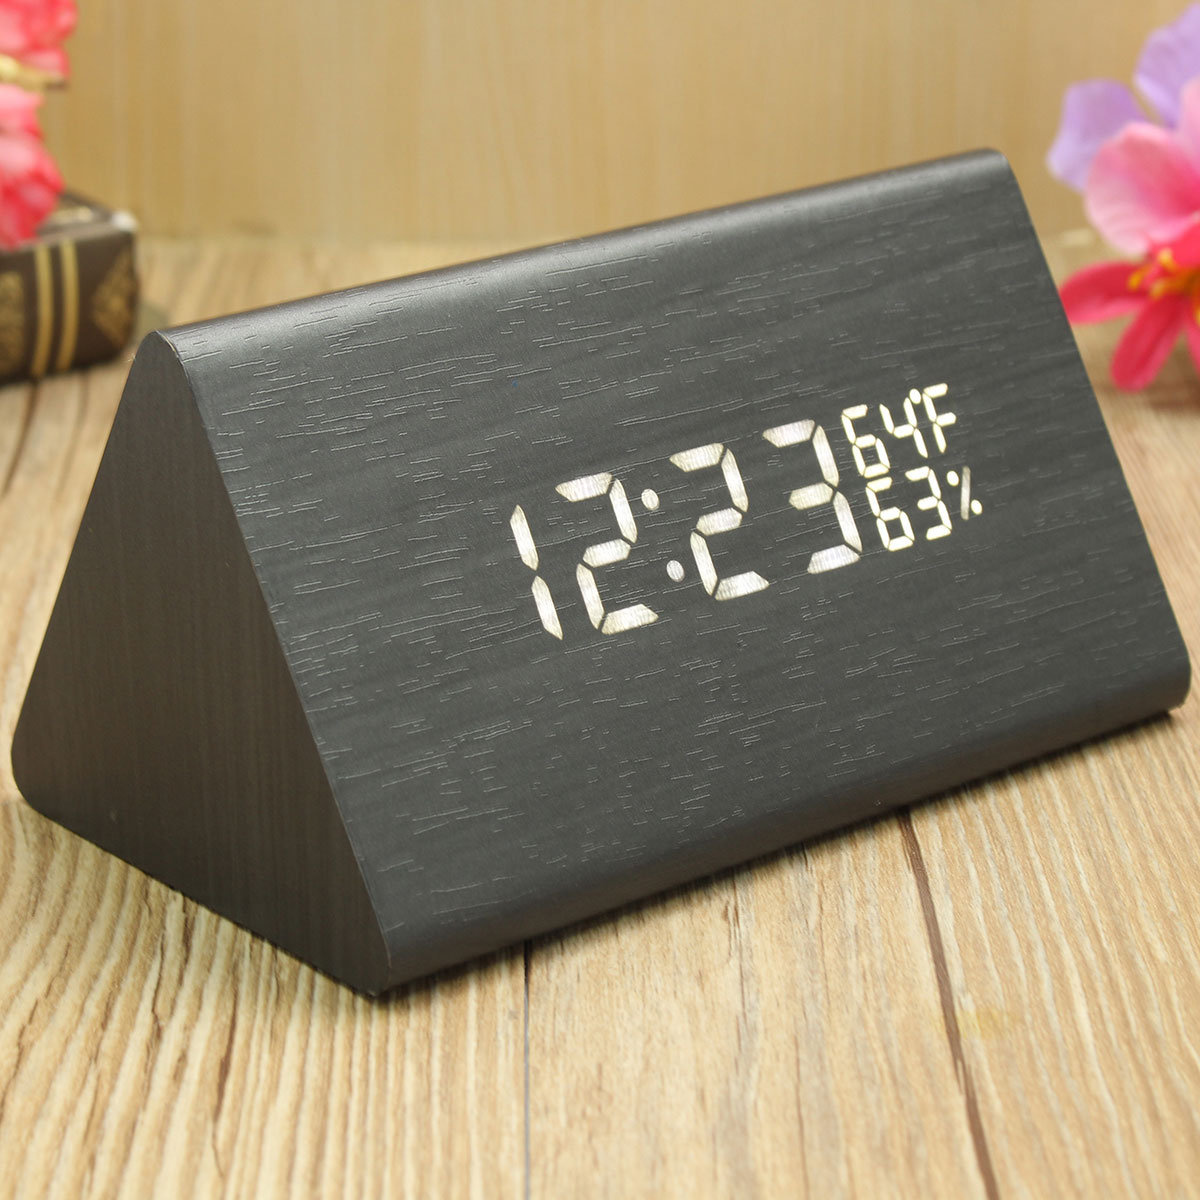 

USB Voice Control Wooden Alarm Clock, Black wooden